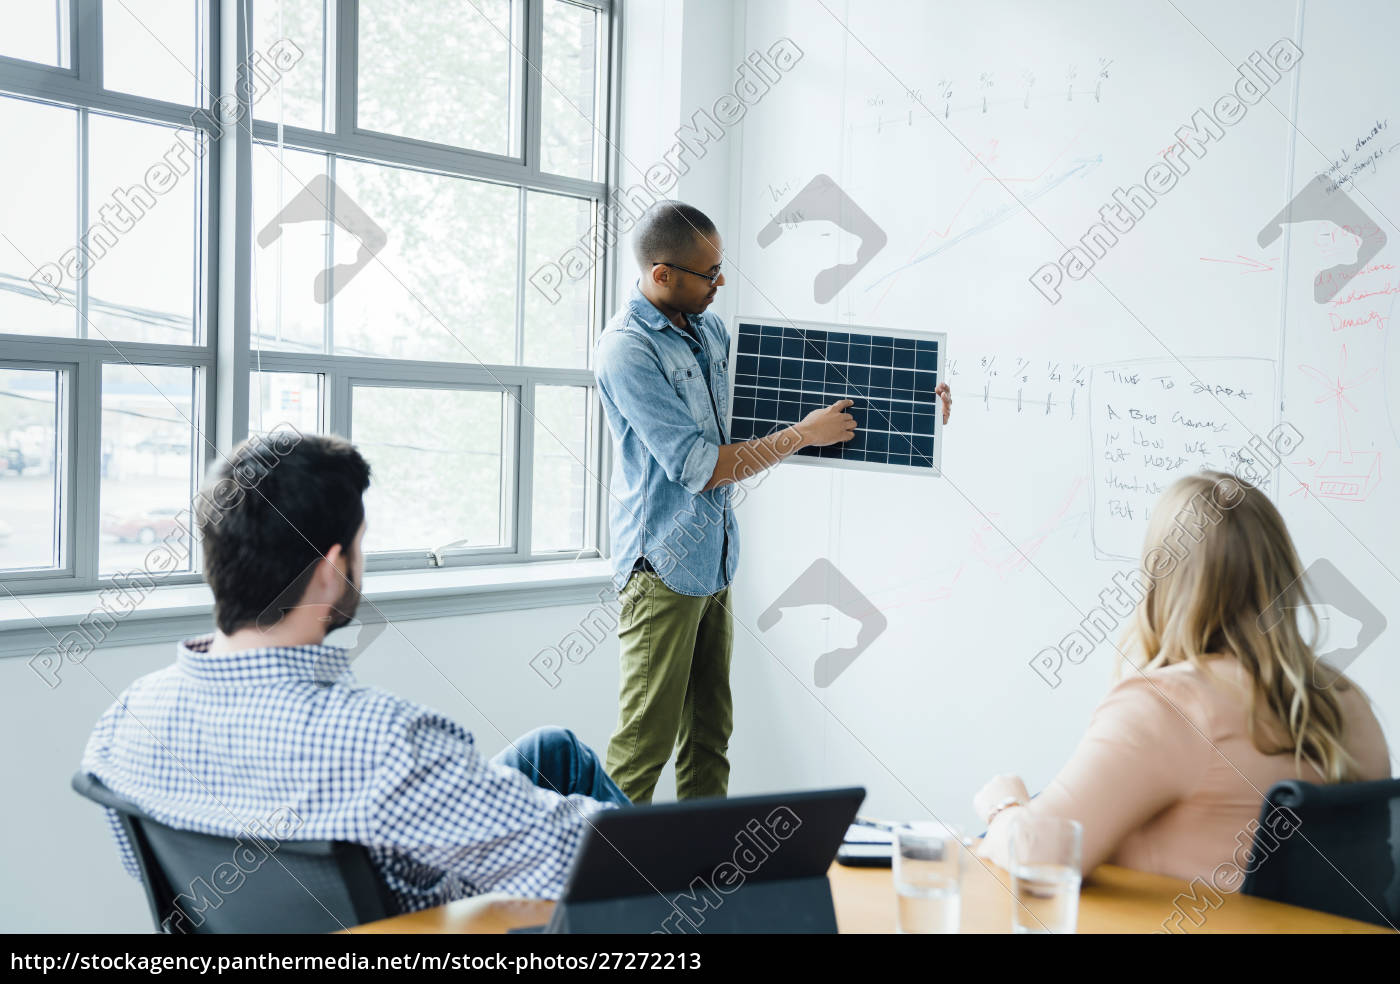 Lizenzfreies Bild 27272213 Man Using Diagram During Board Room Presentation